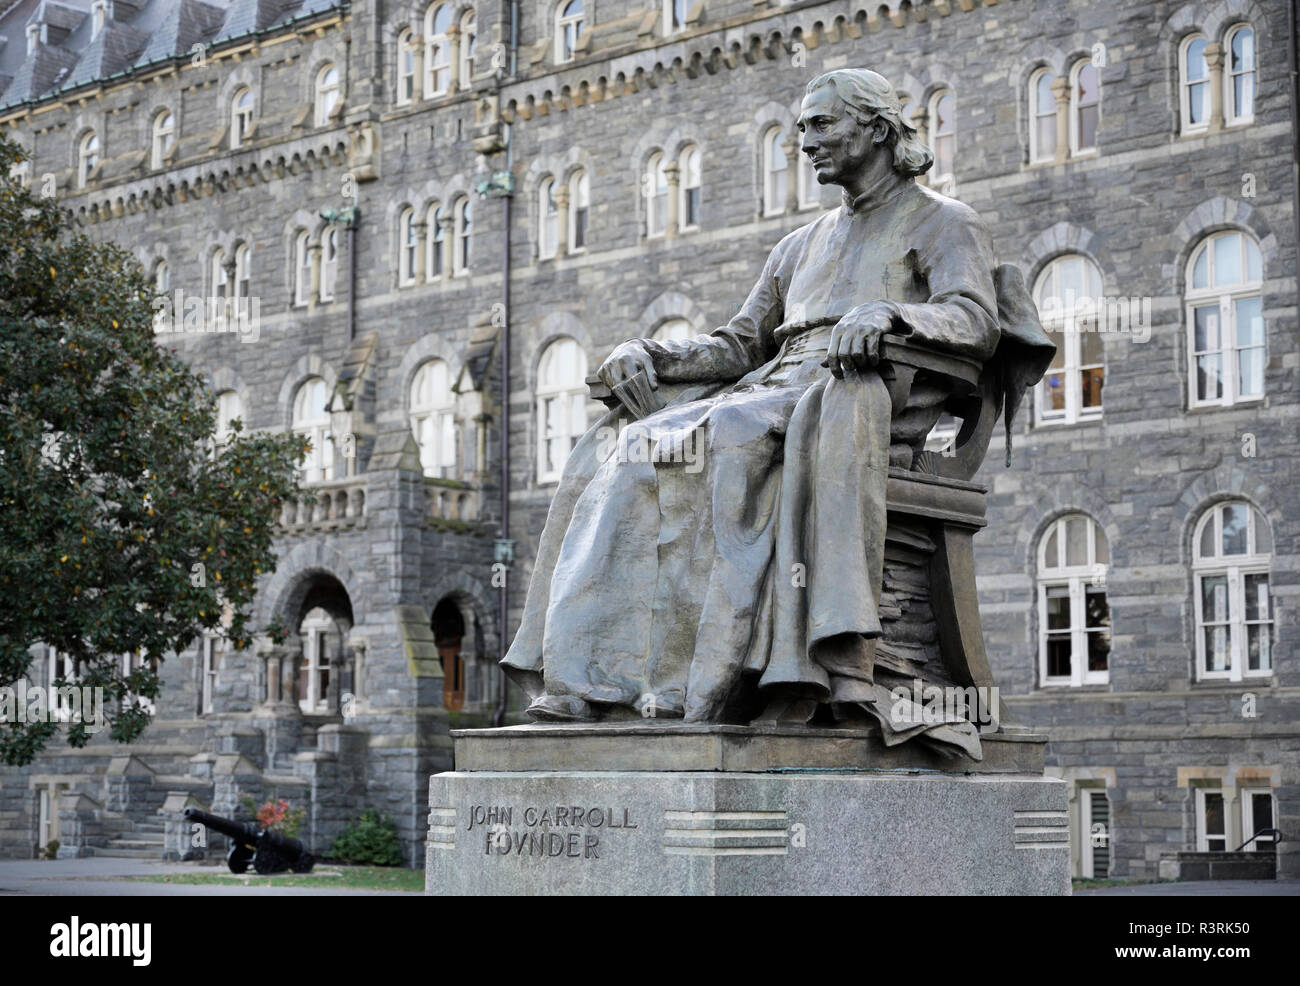 John Carroll estatua del fundador de la Universidad de Georgetown Foto de stock